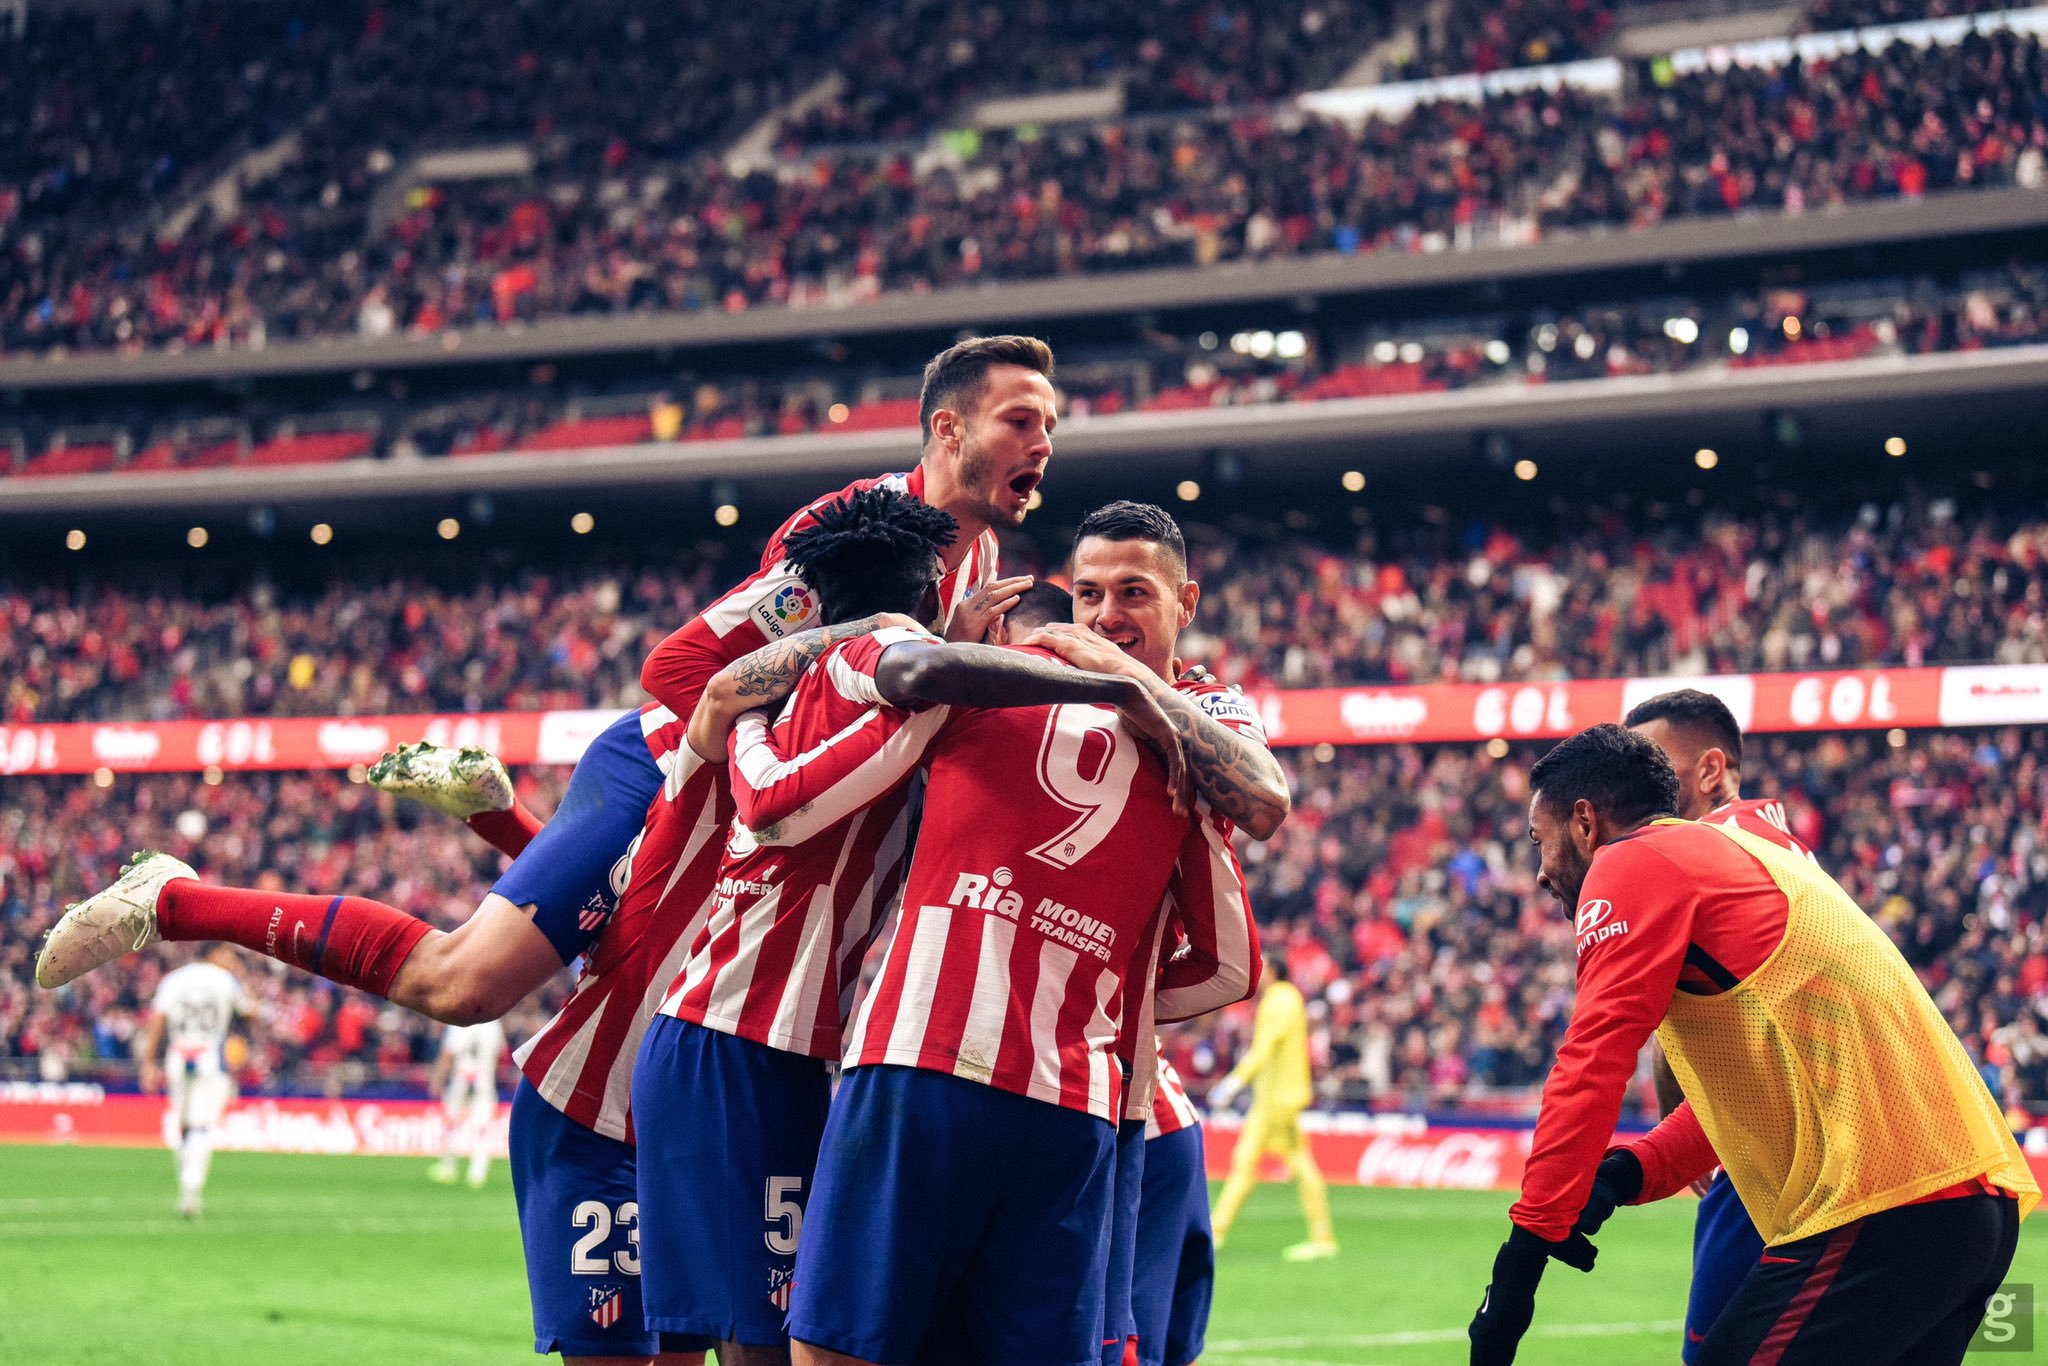 Atlético de Madrid le pegó al Espanyol. Foto: Twitter